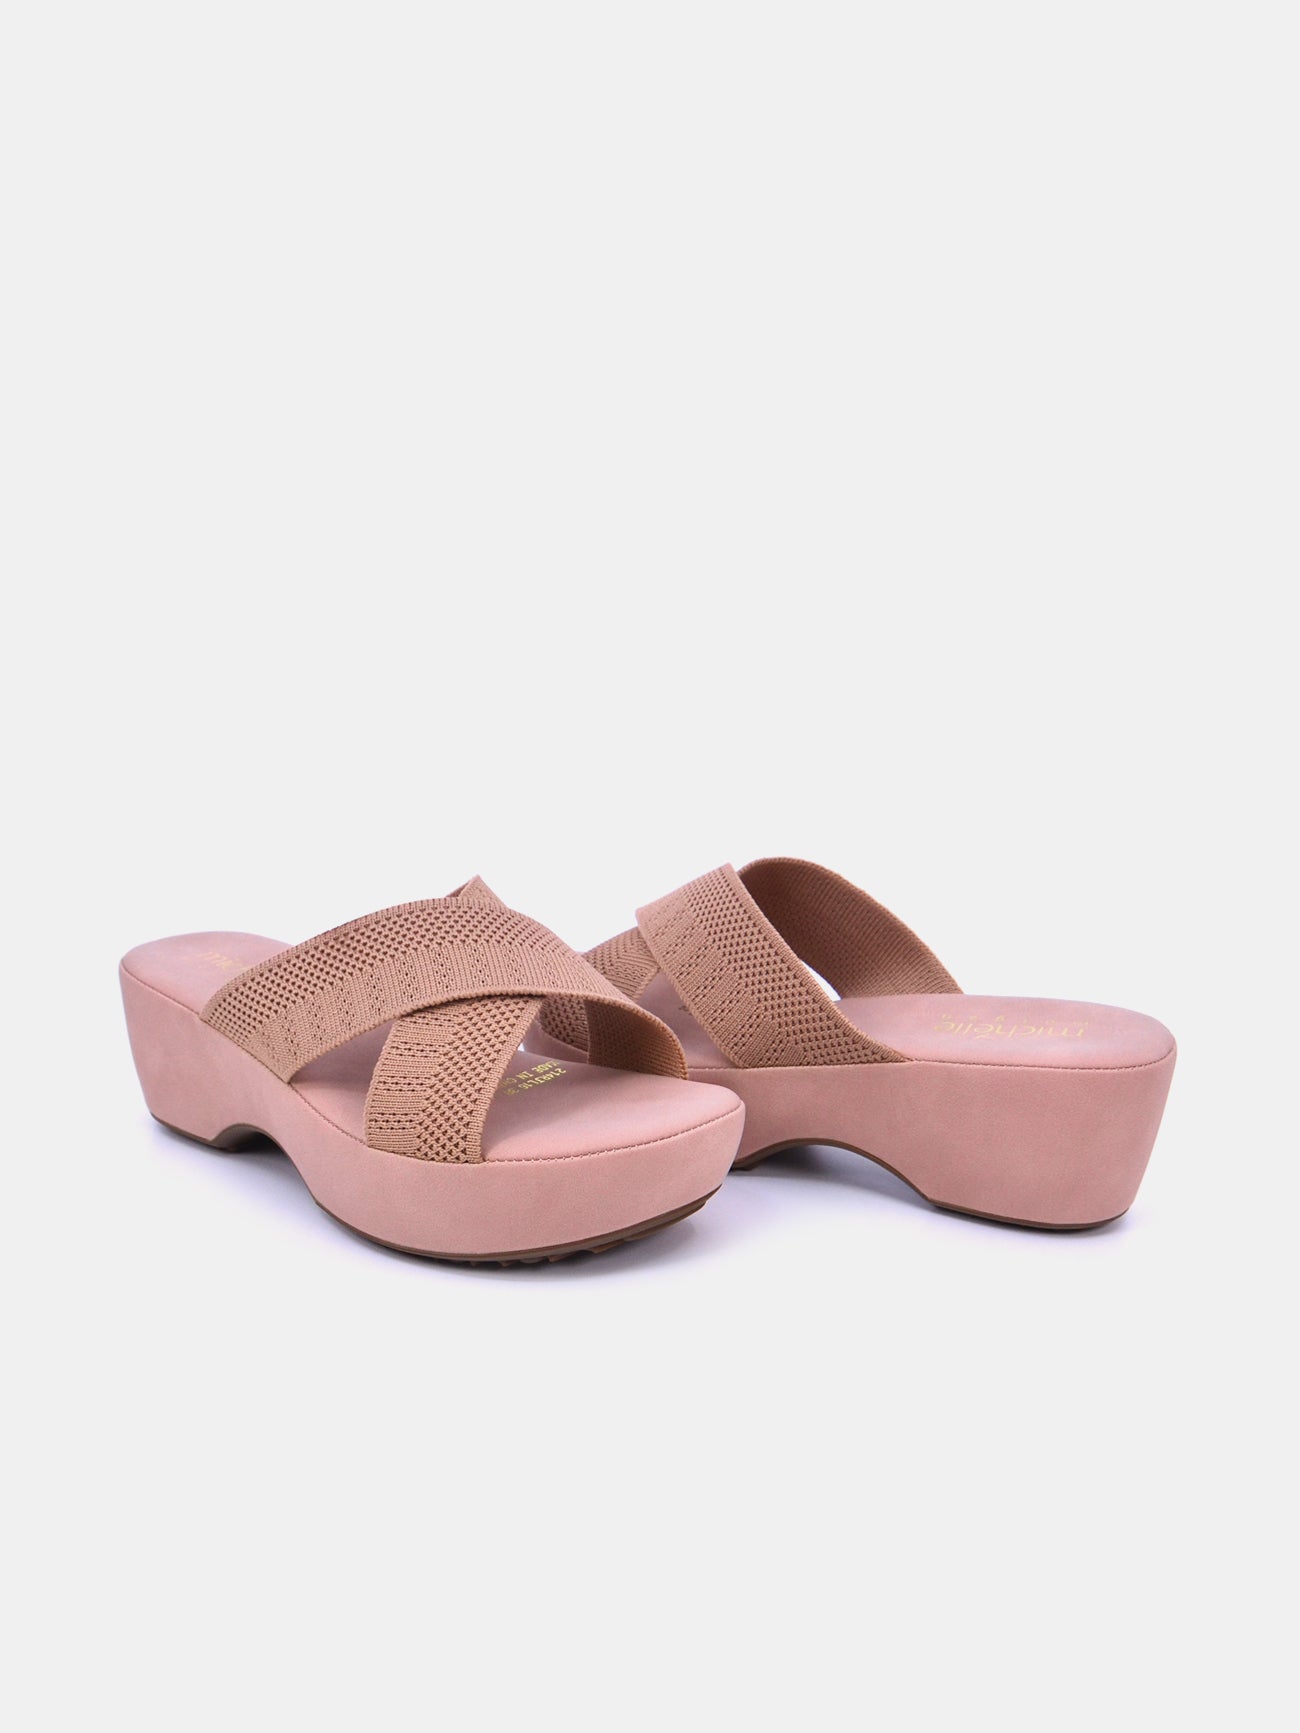 Michelle Morgan 214RJL16 Women's Heeled Sandals #color_Pink